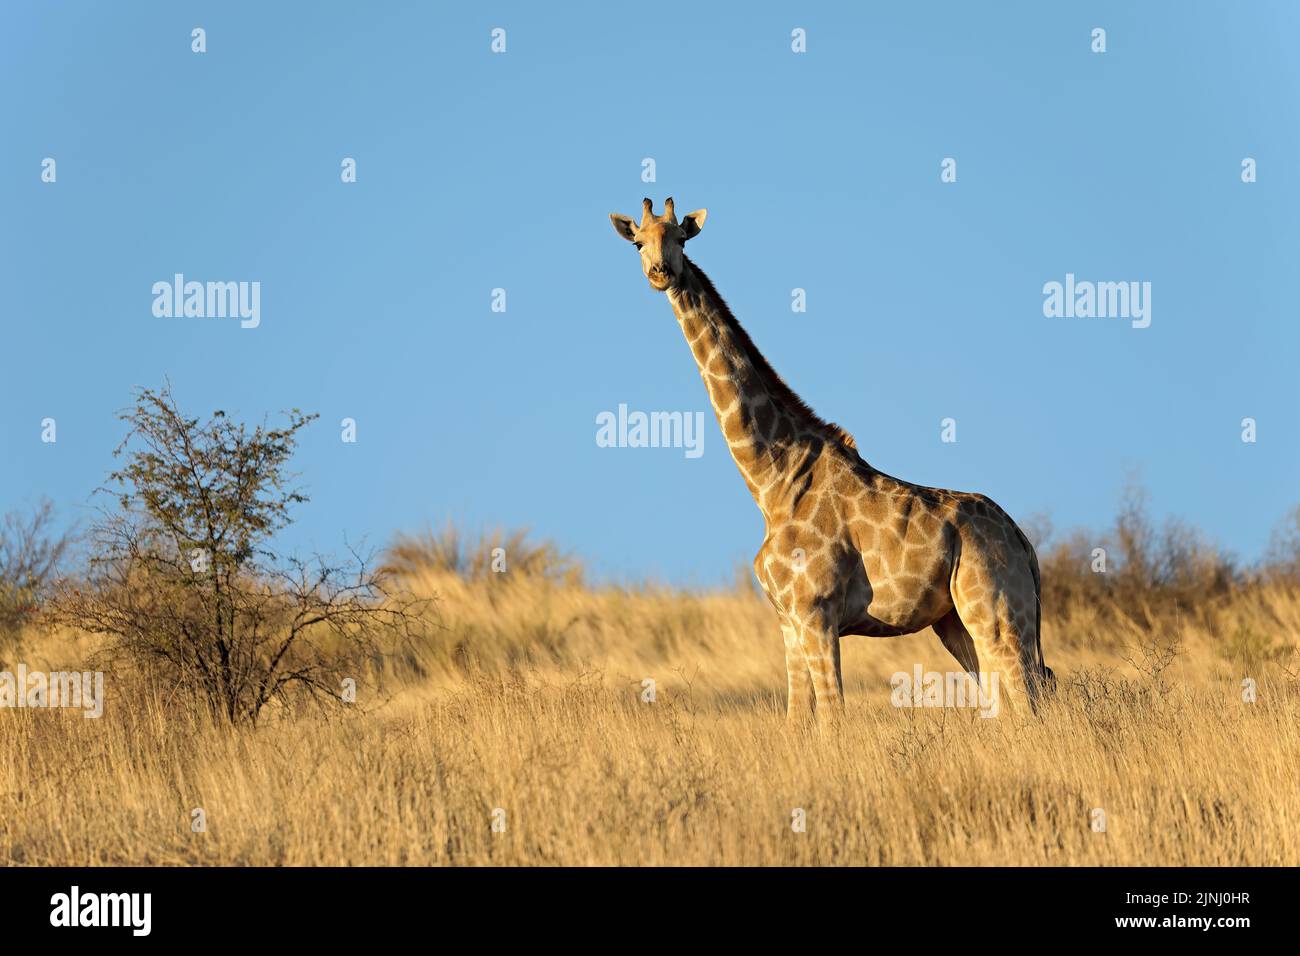 A giraffe (Giraffa camelopardalis) in natural habitat, Kalahari desert, South Africa Stock Photo